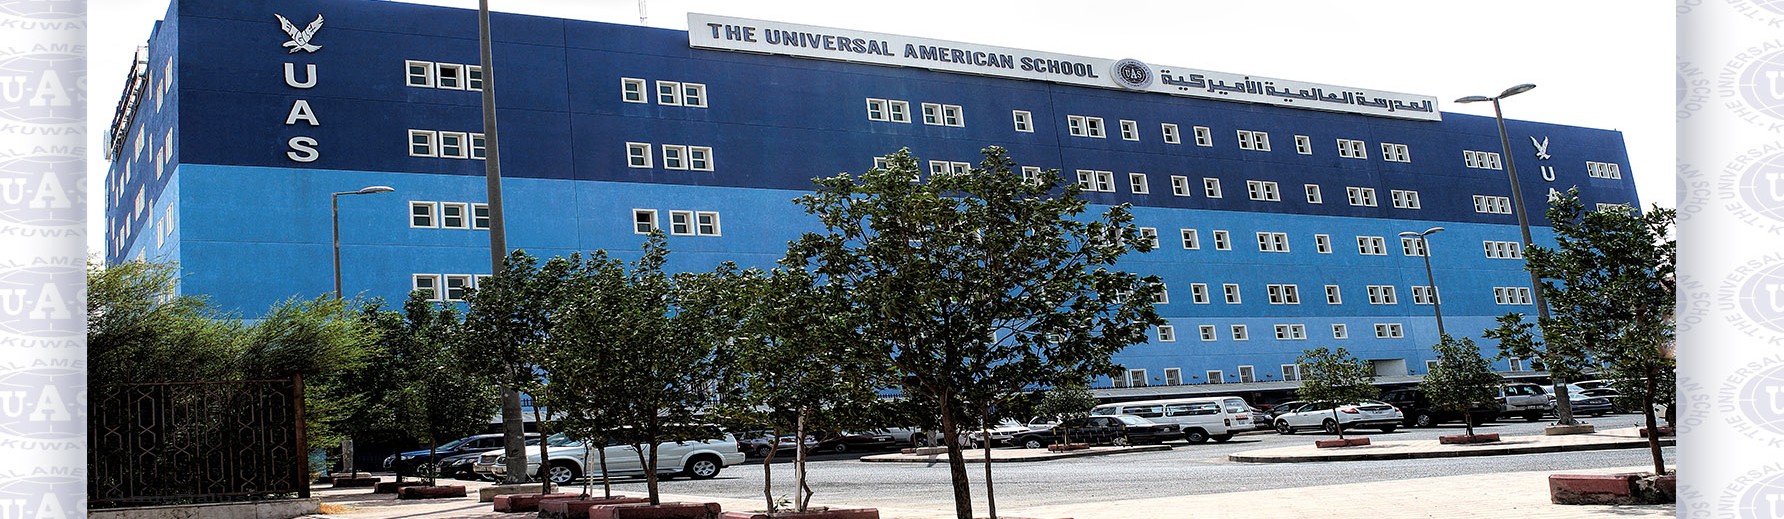 The Universal American School - Kuwait Banner